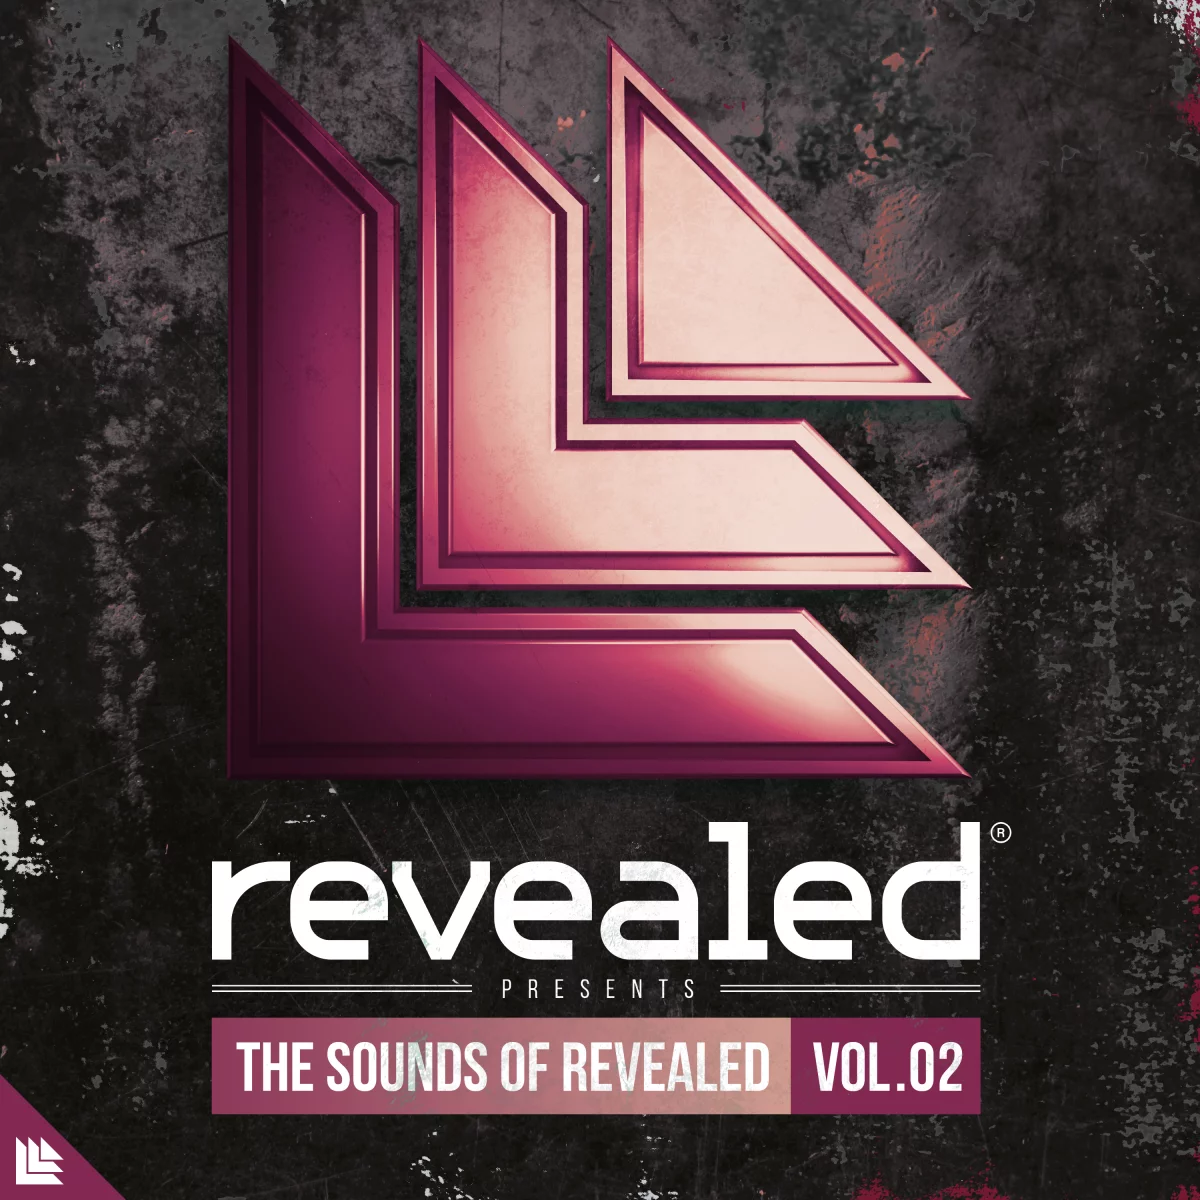 [LIGHT] The Sounds Of Revealed Vol. 2 - revealedrec⁠ 